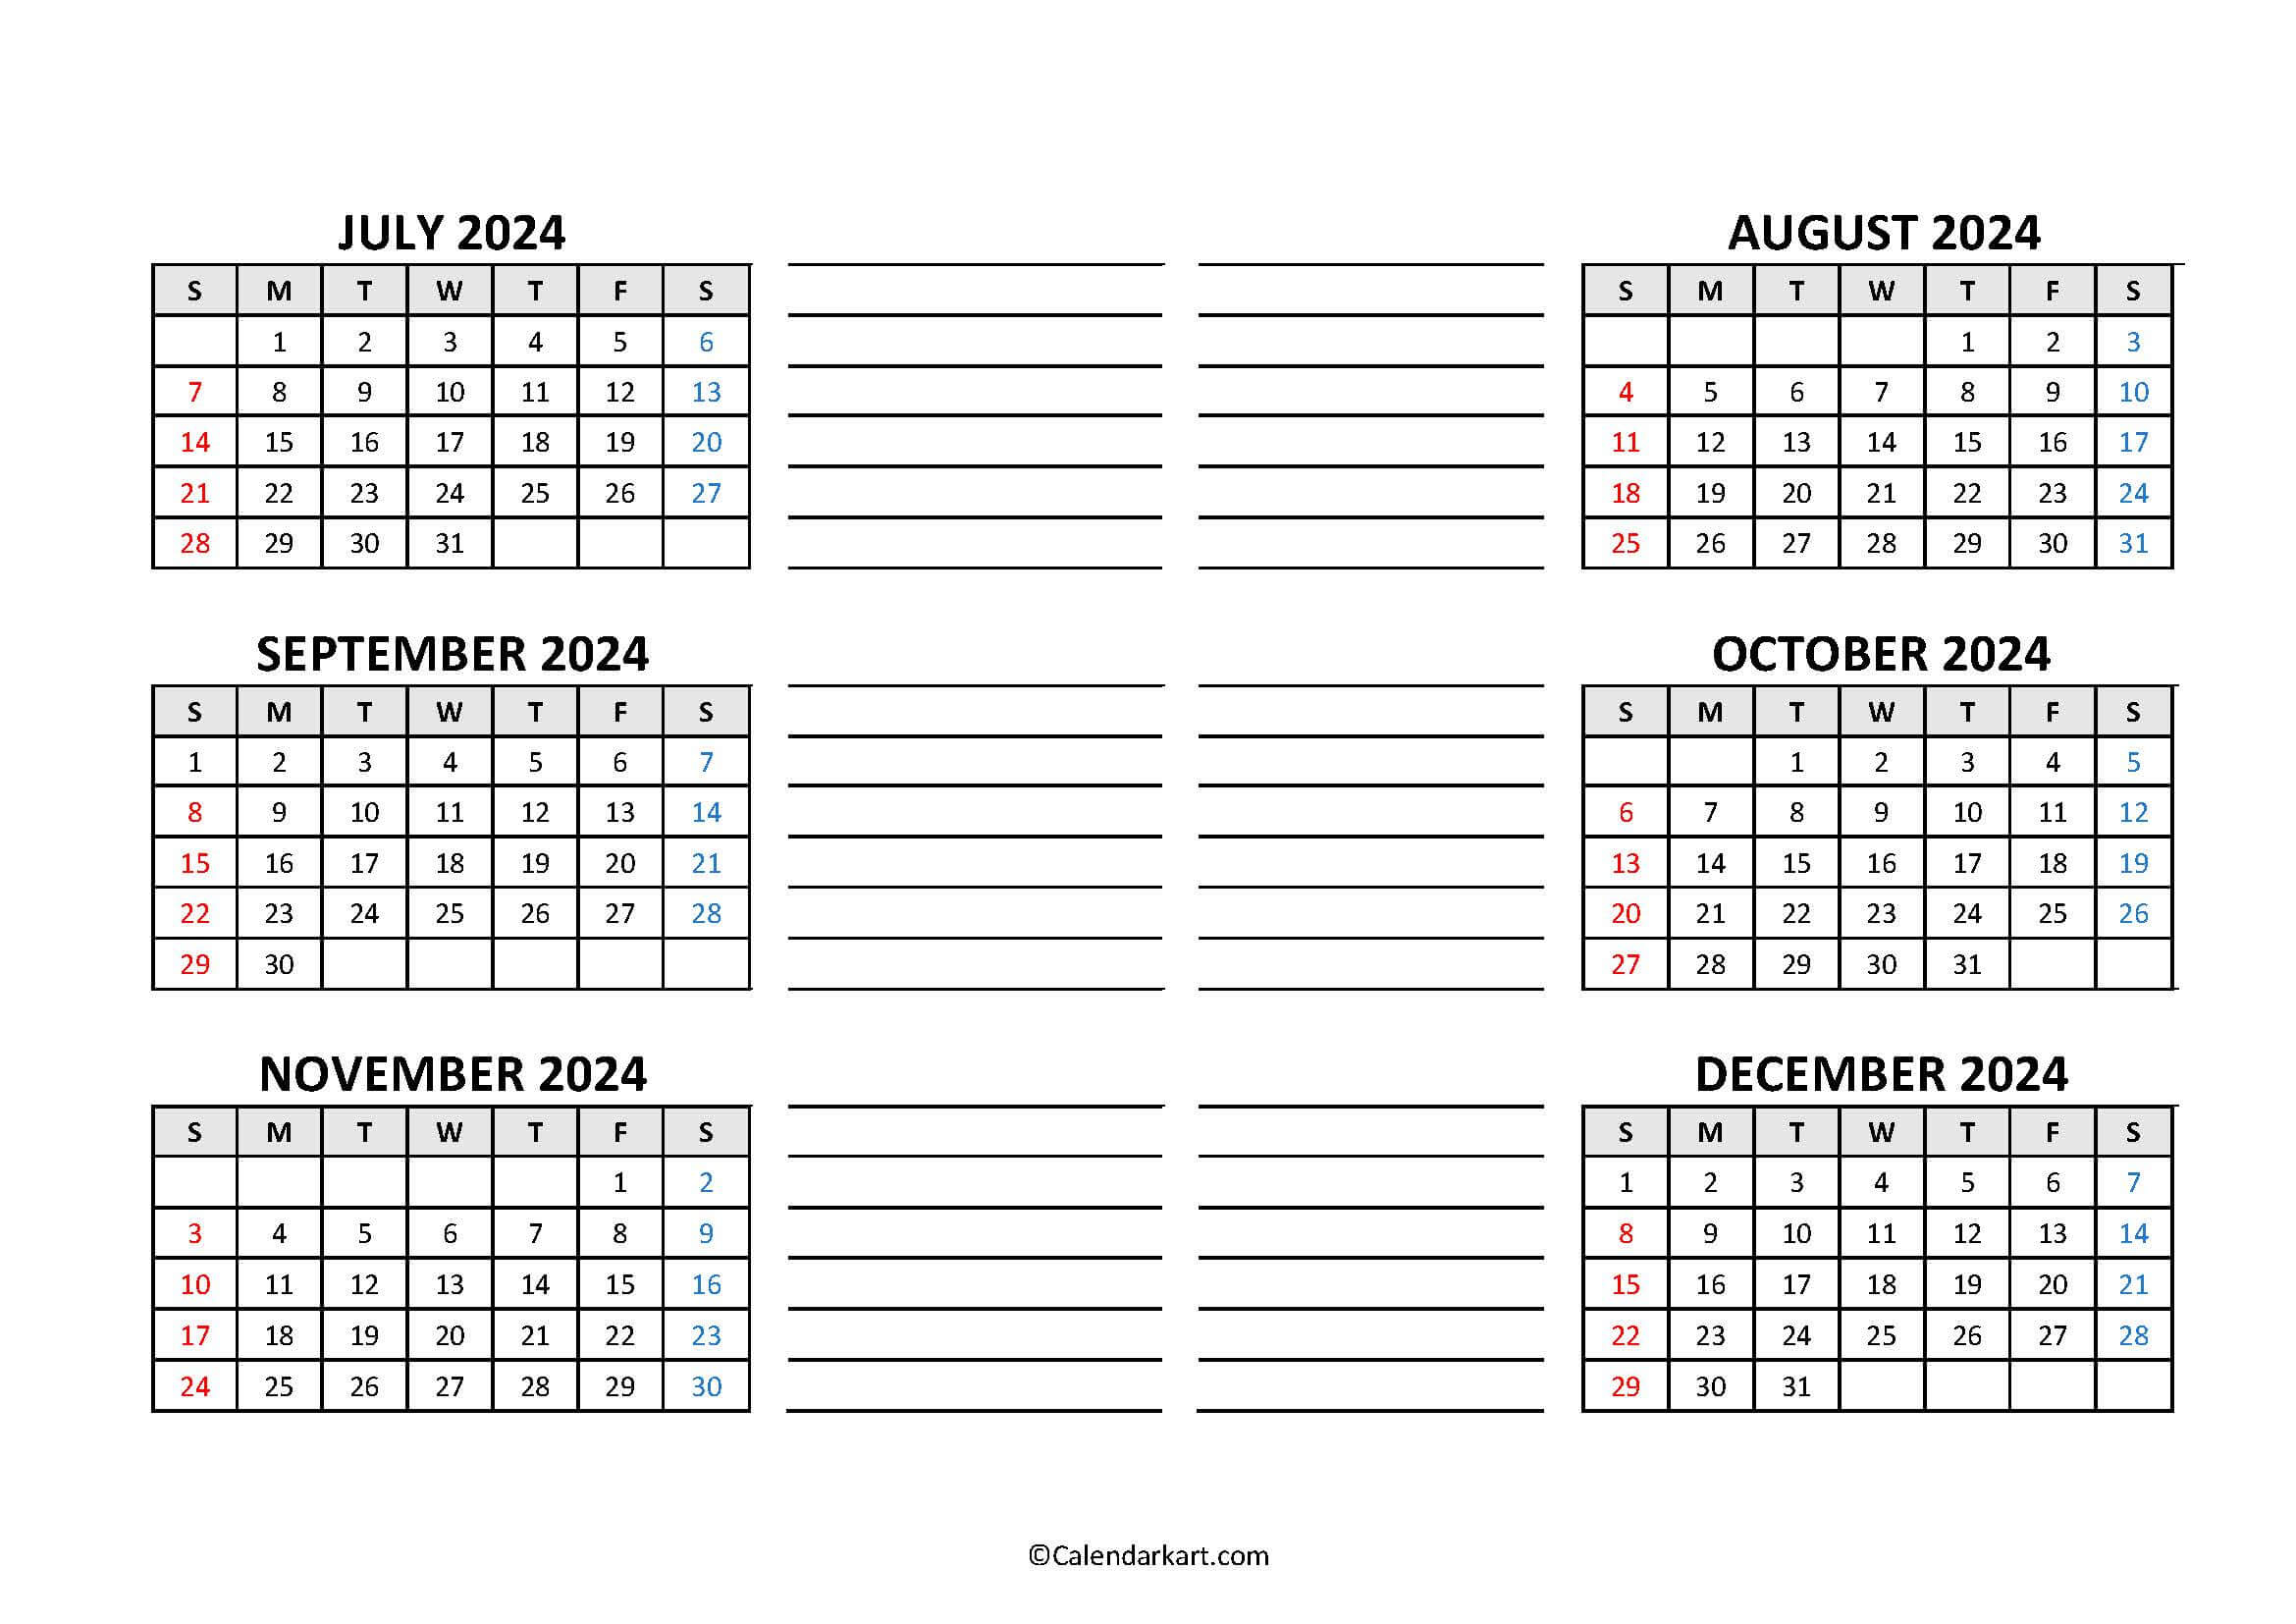 Free Printable Year At A Glance Calendar 2024 - Calendarkart | Printable Calendar July To December 2024